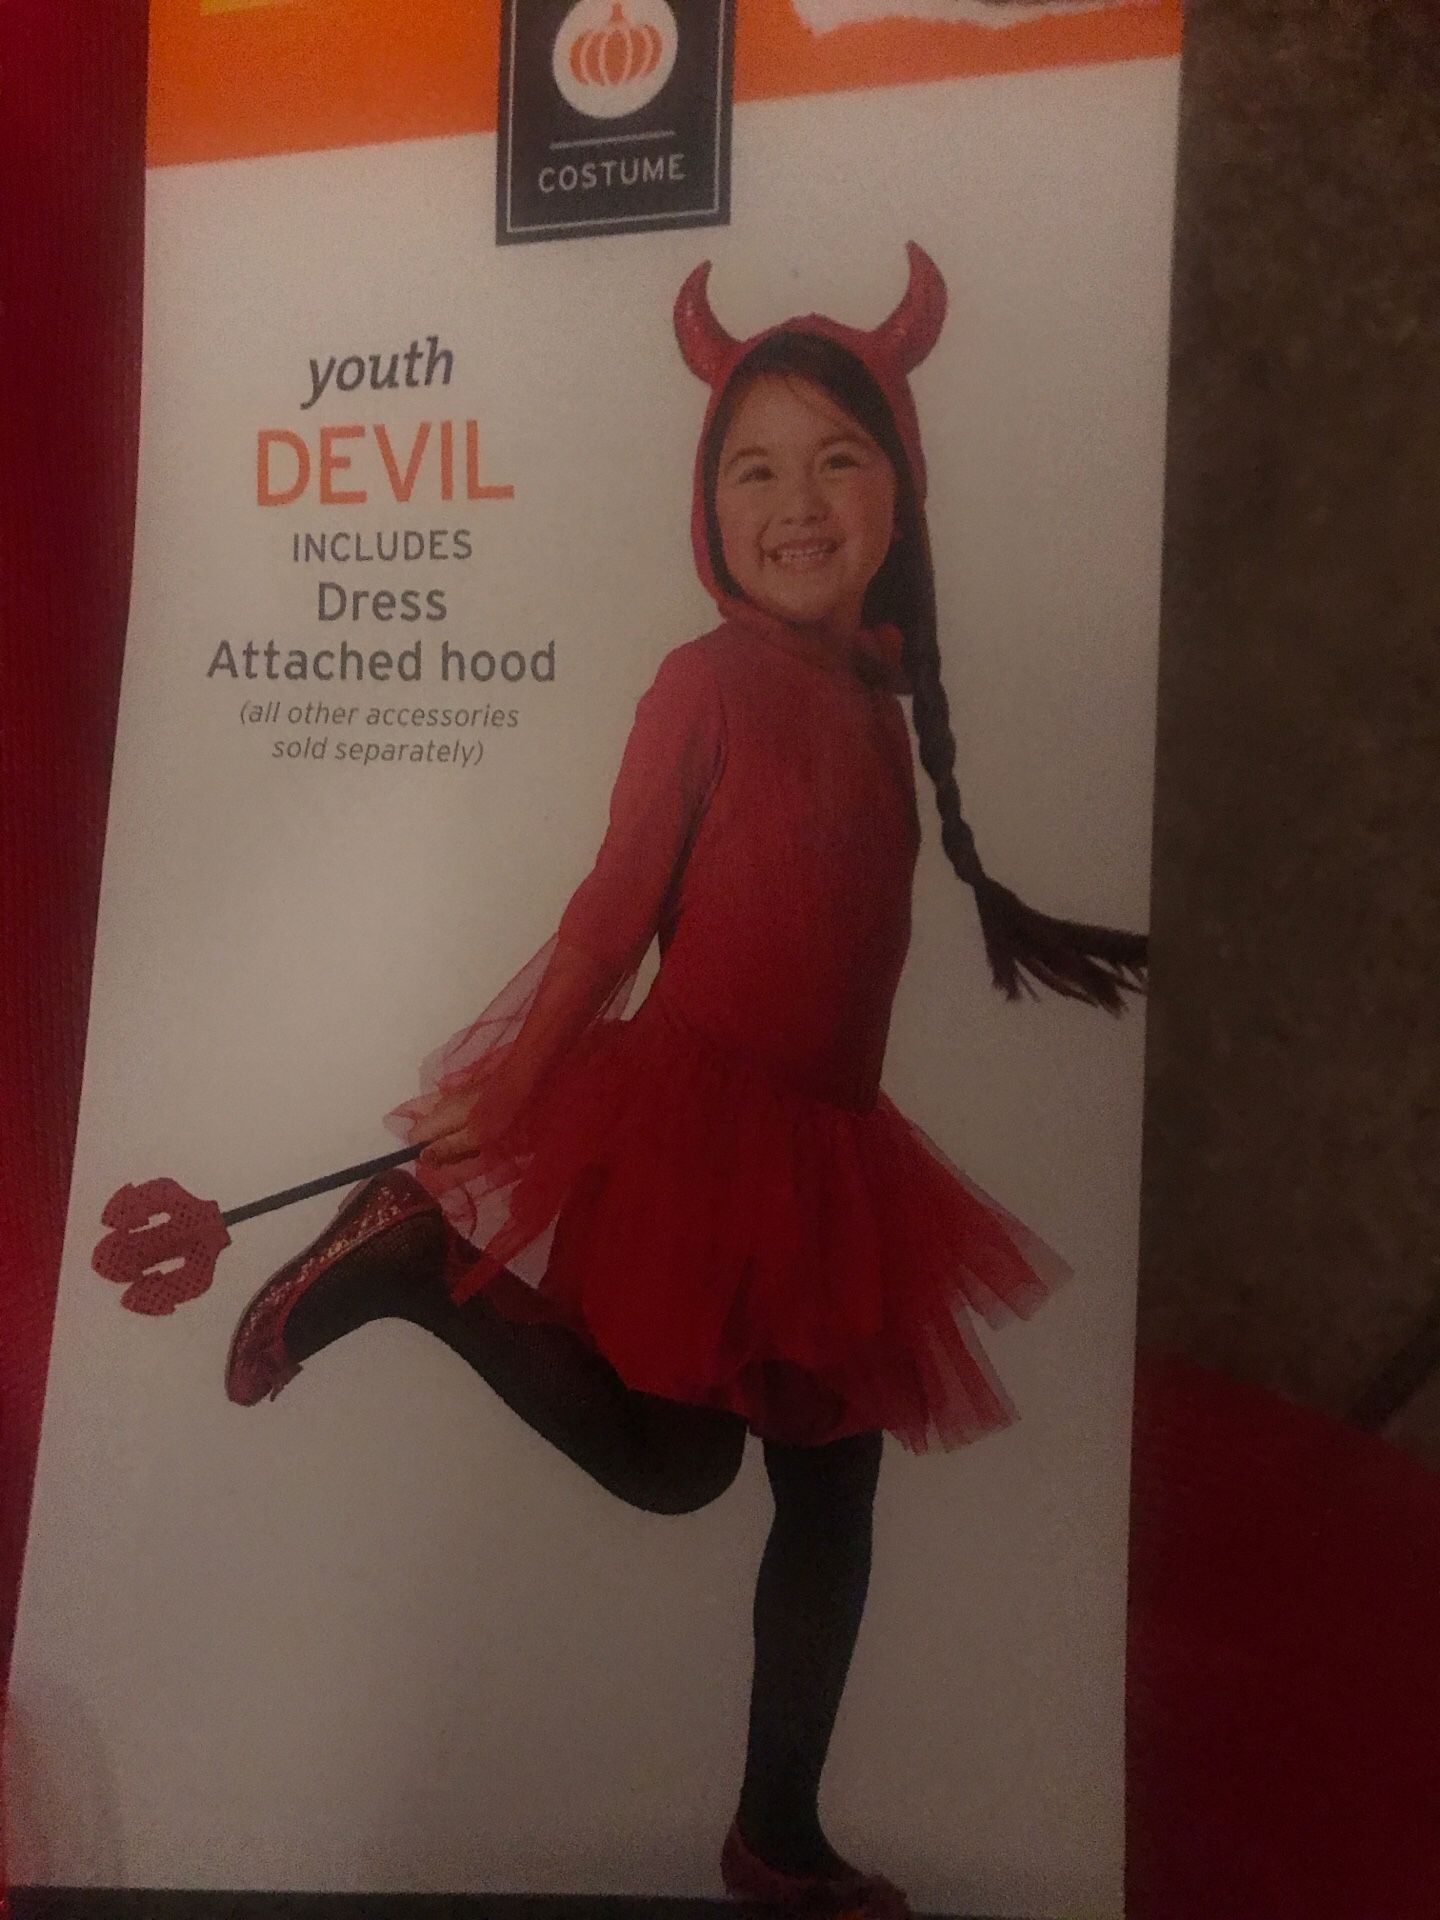 Youth devil dress costume